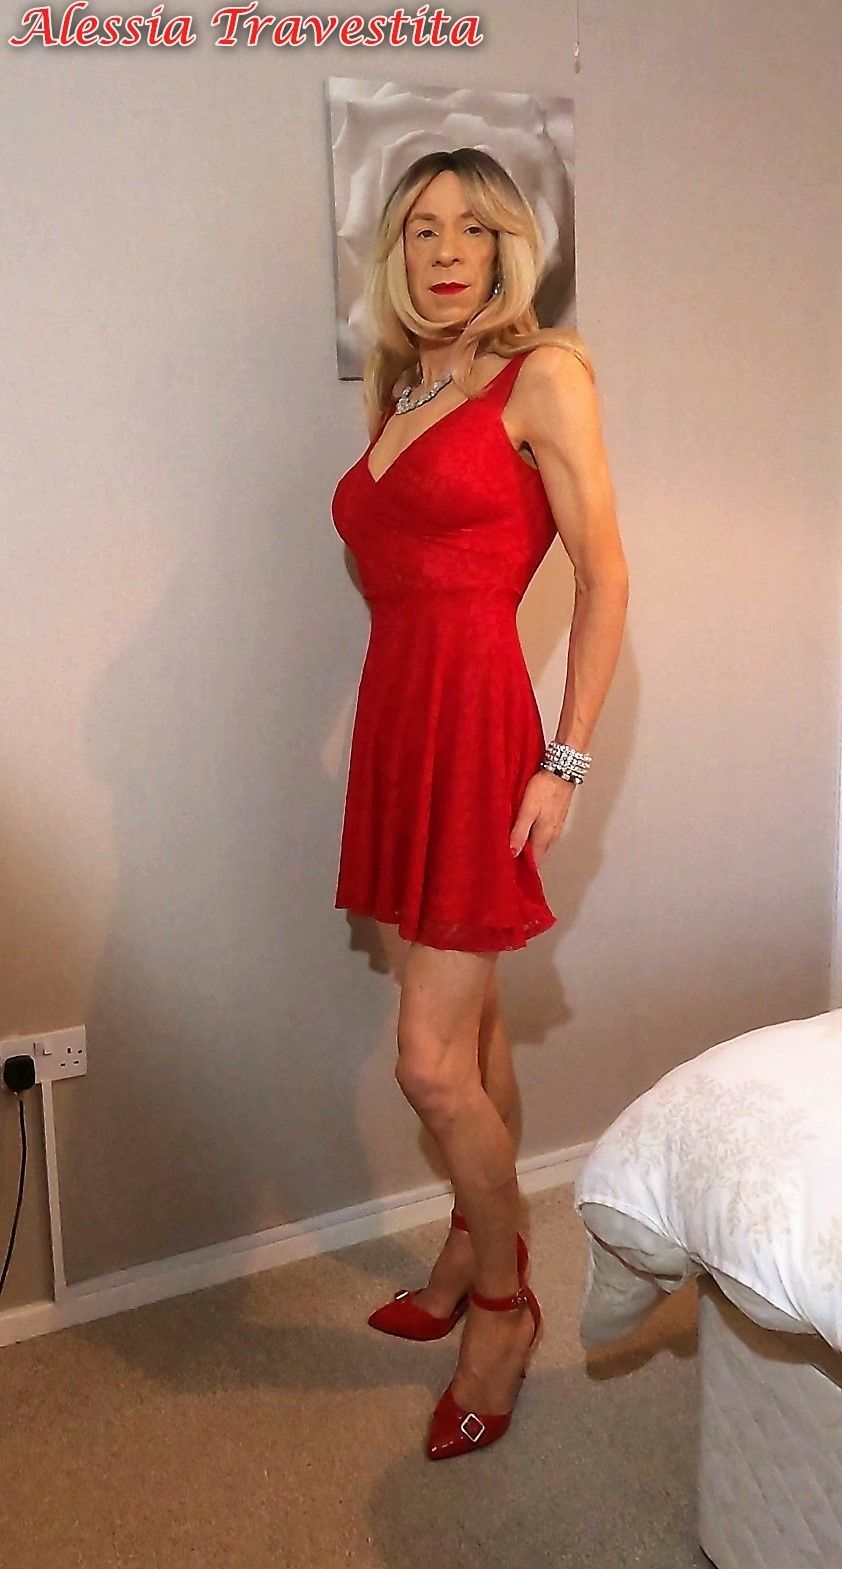 65 Alessia Travestita in Flirty Red Dress #9